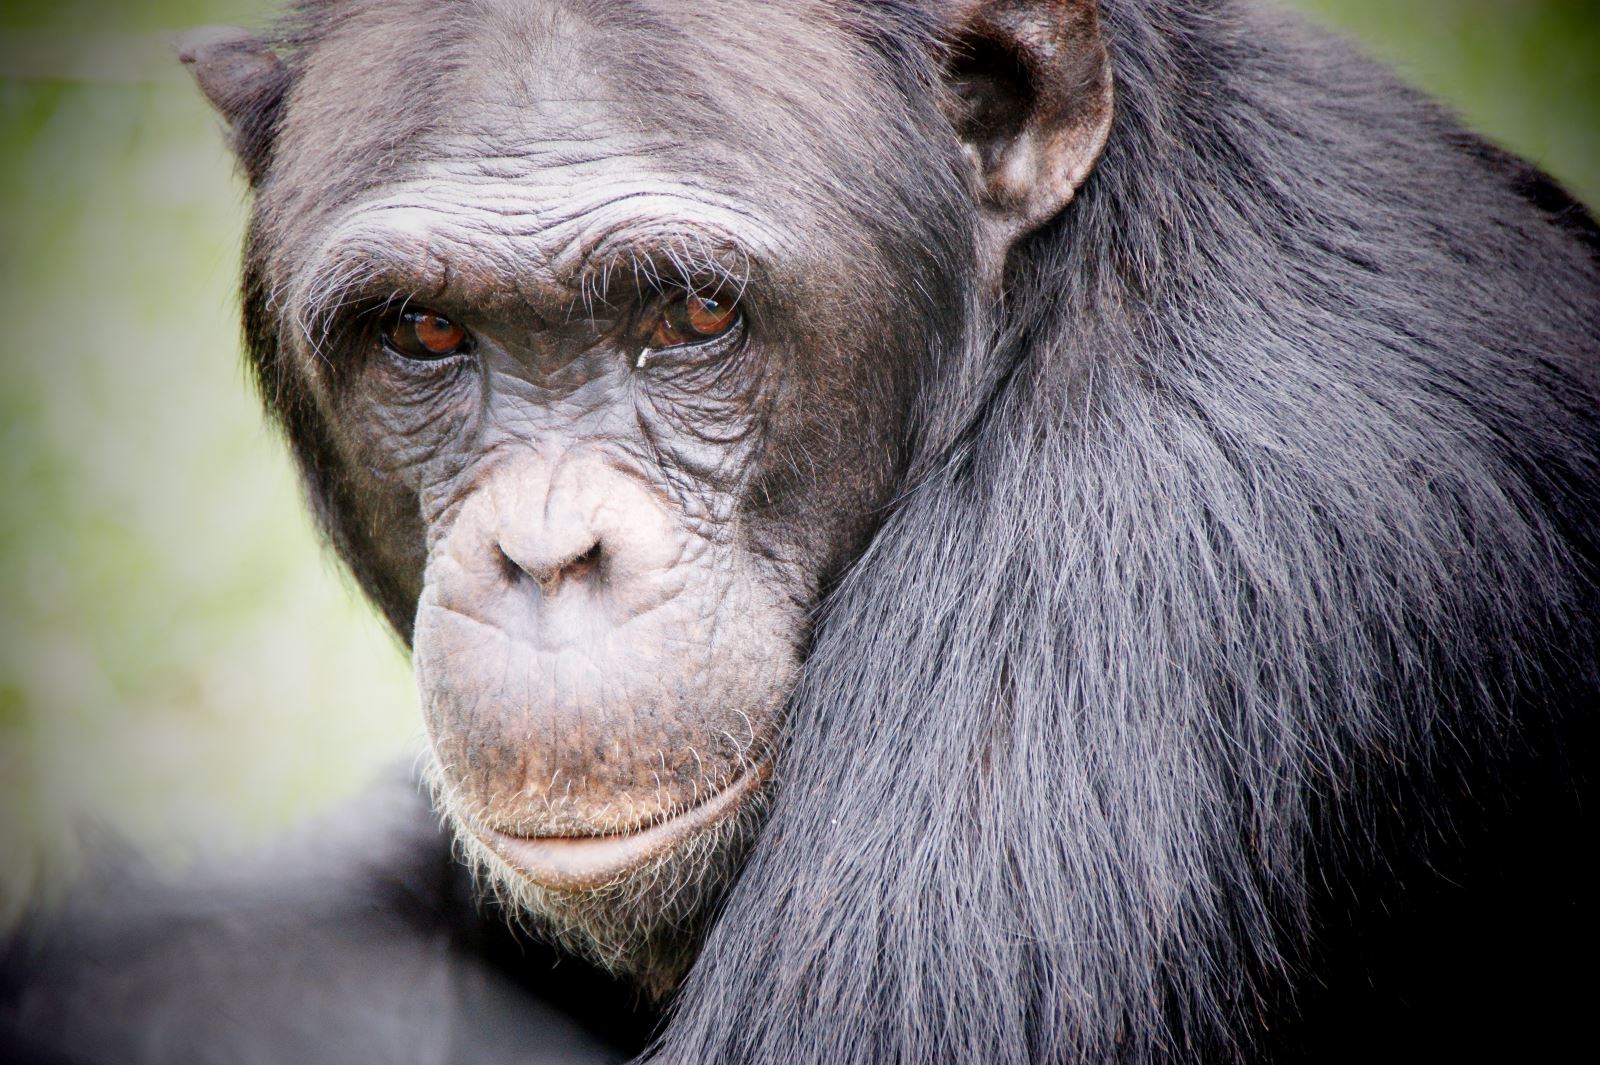 Chimpanzee Tracking at Nyungwe Forest in Rwanda, Africa